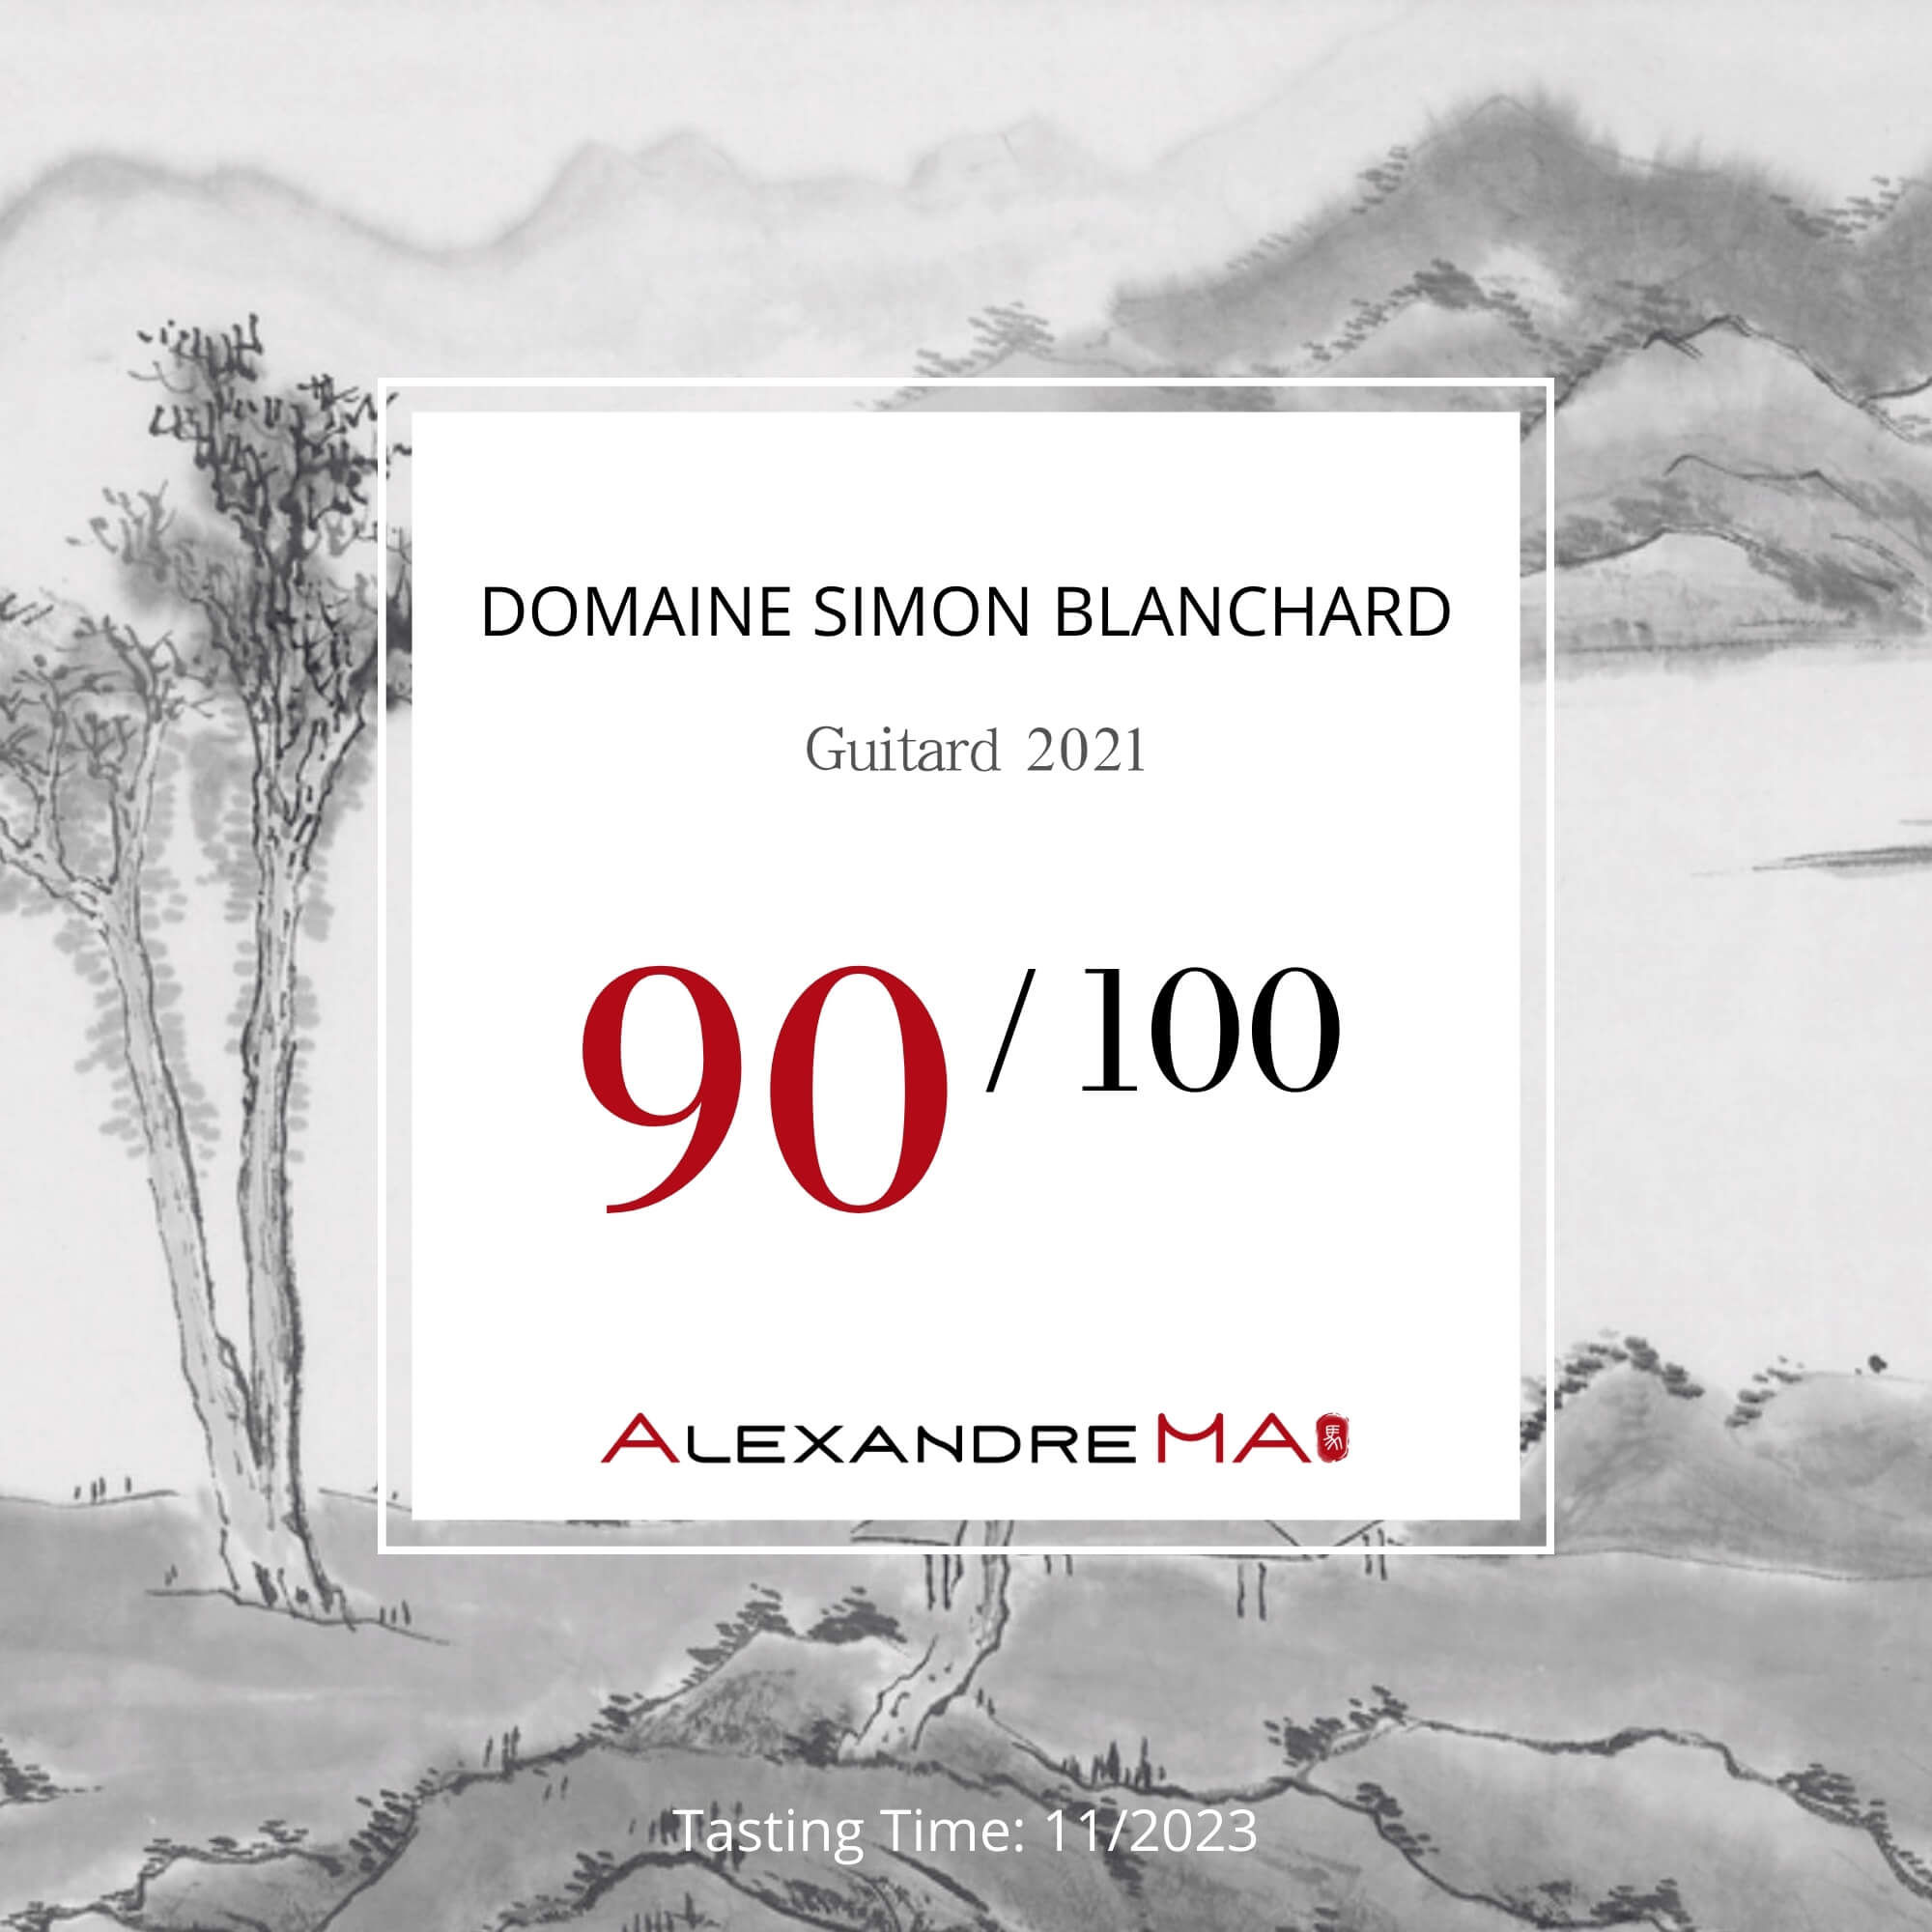 Domaine Simon Blanchard-Guitard 2021 - Alexandre MA